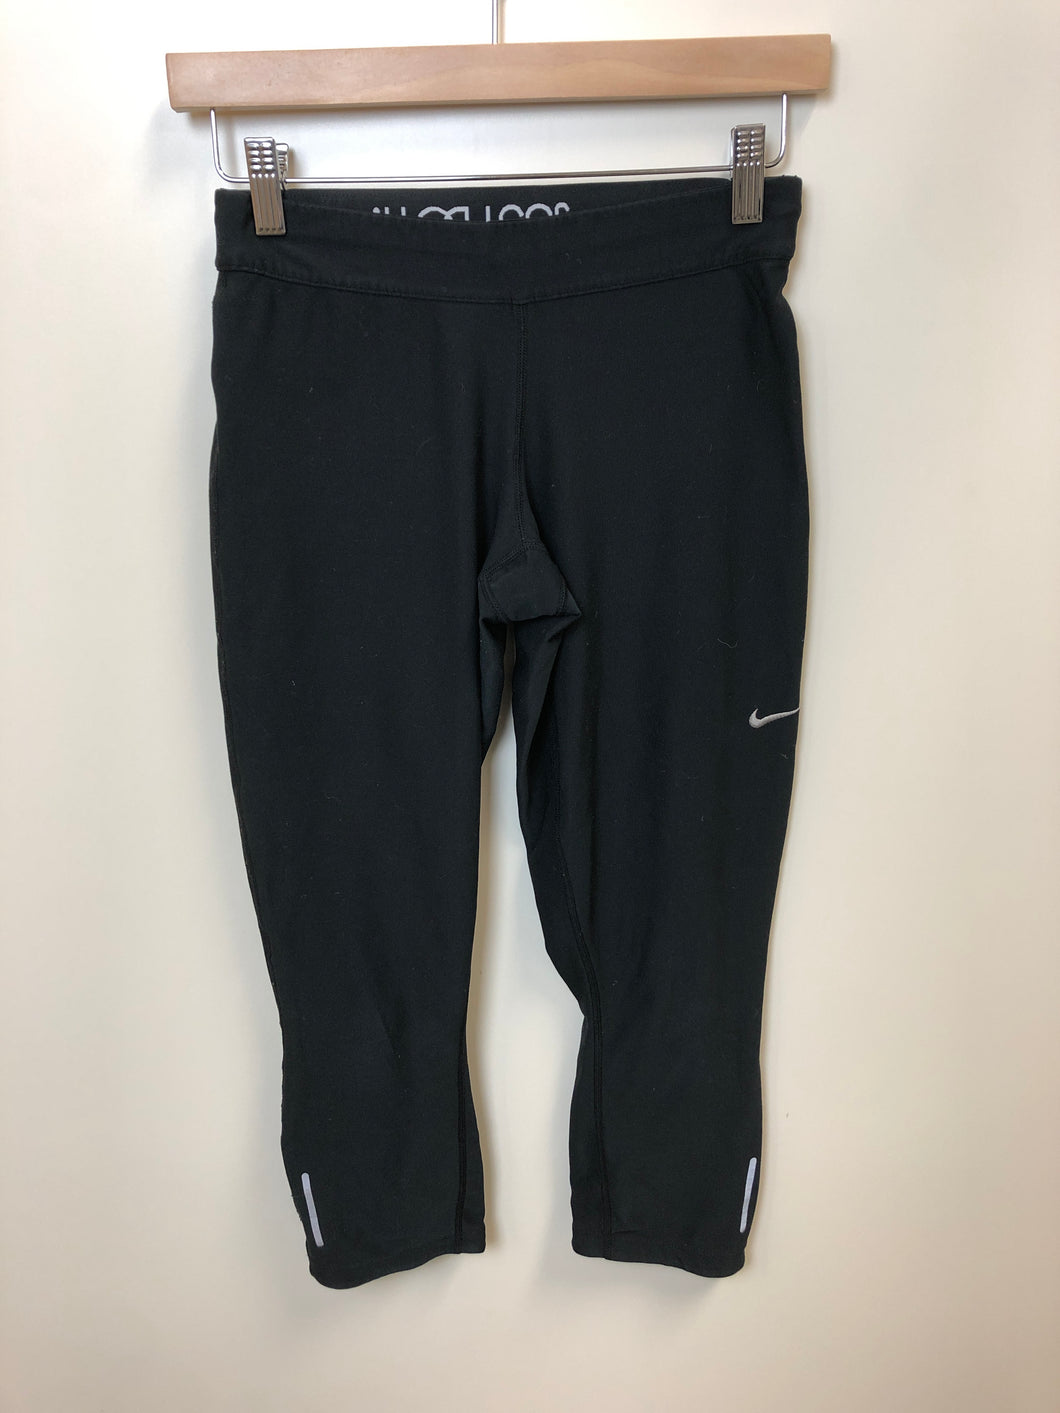 Nike Womens Athletic Pants Size Medium